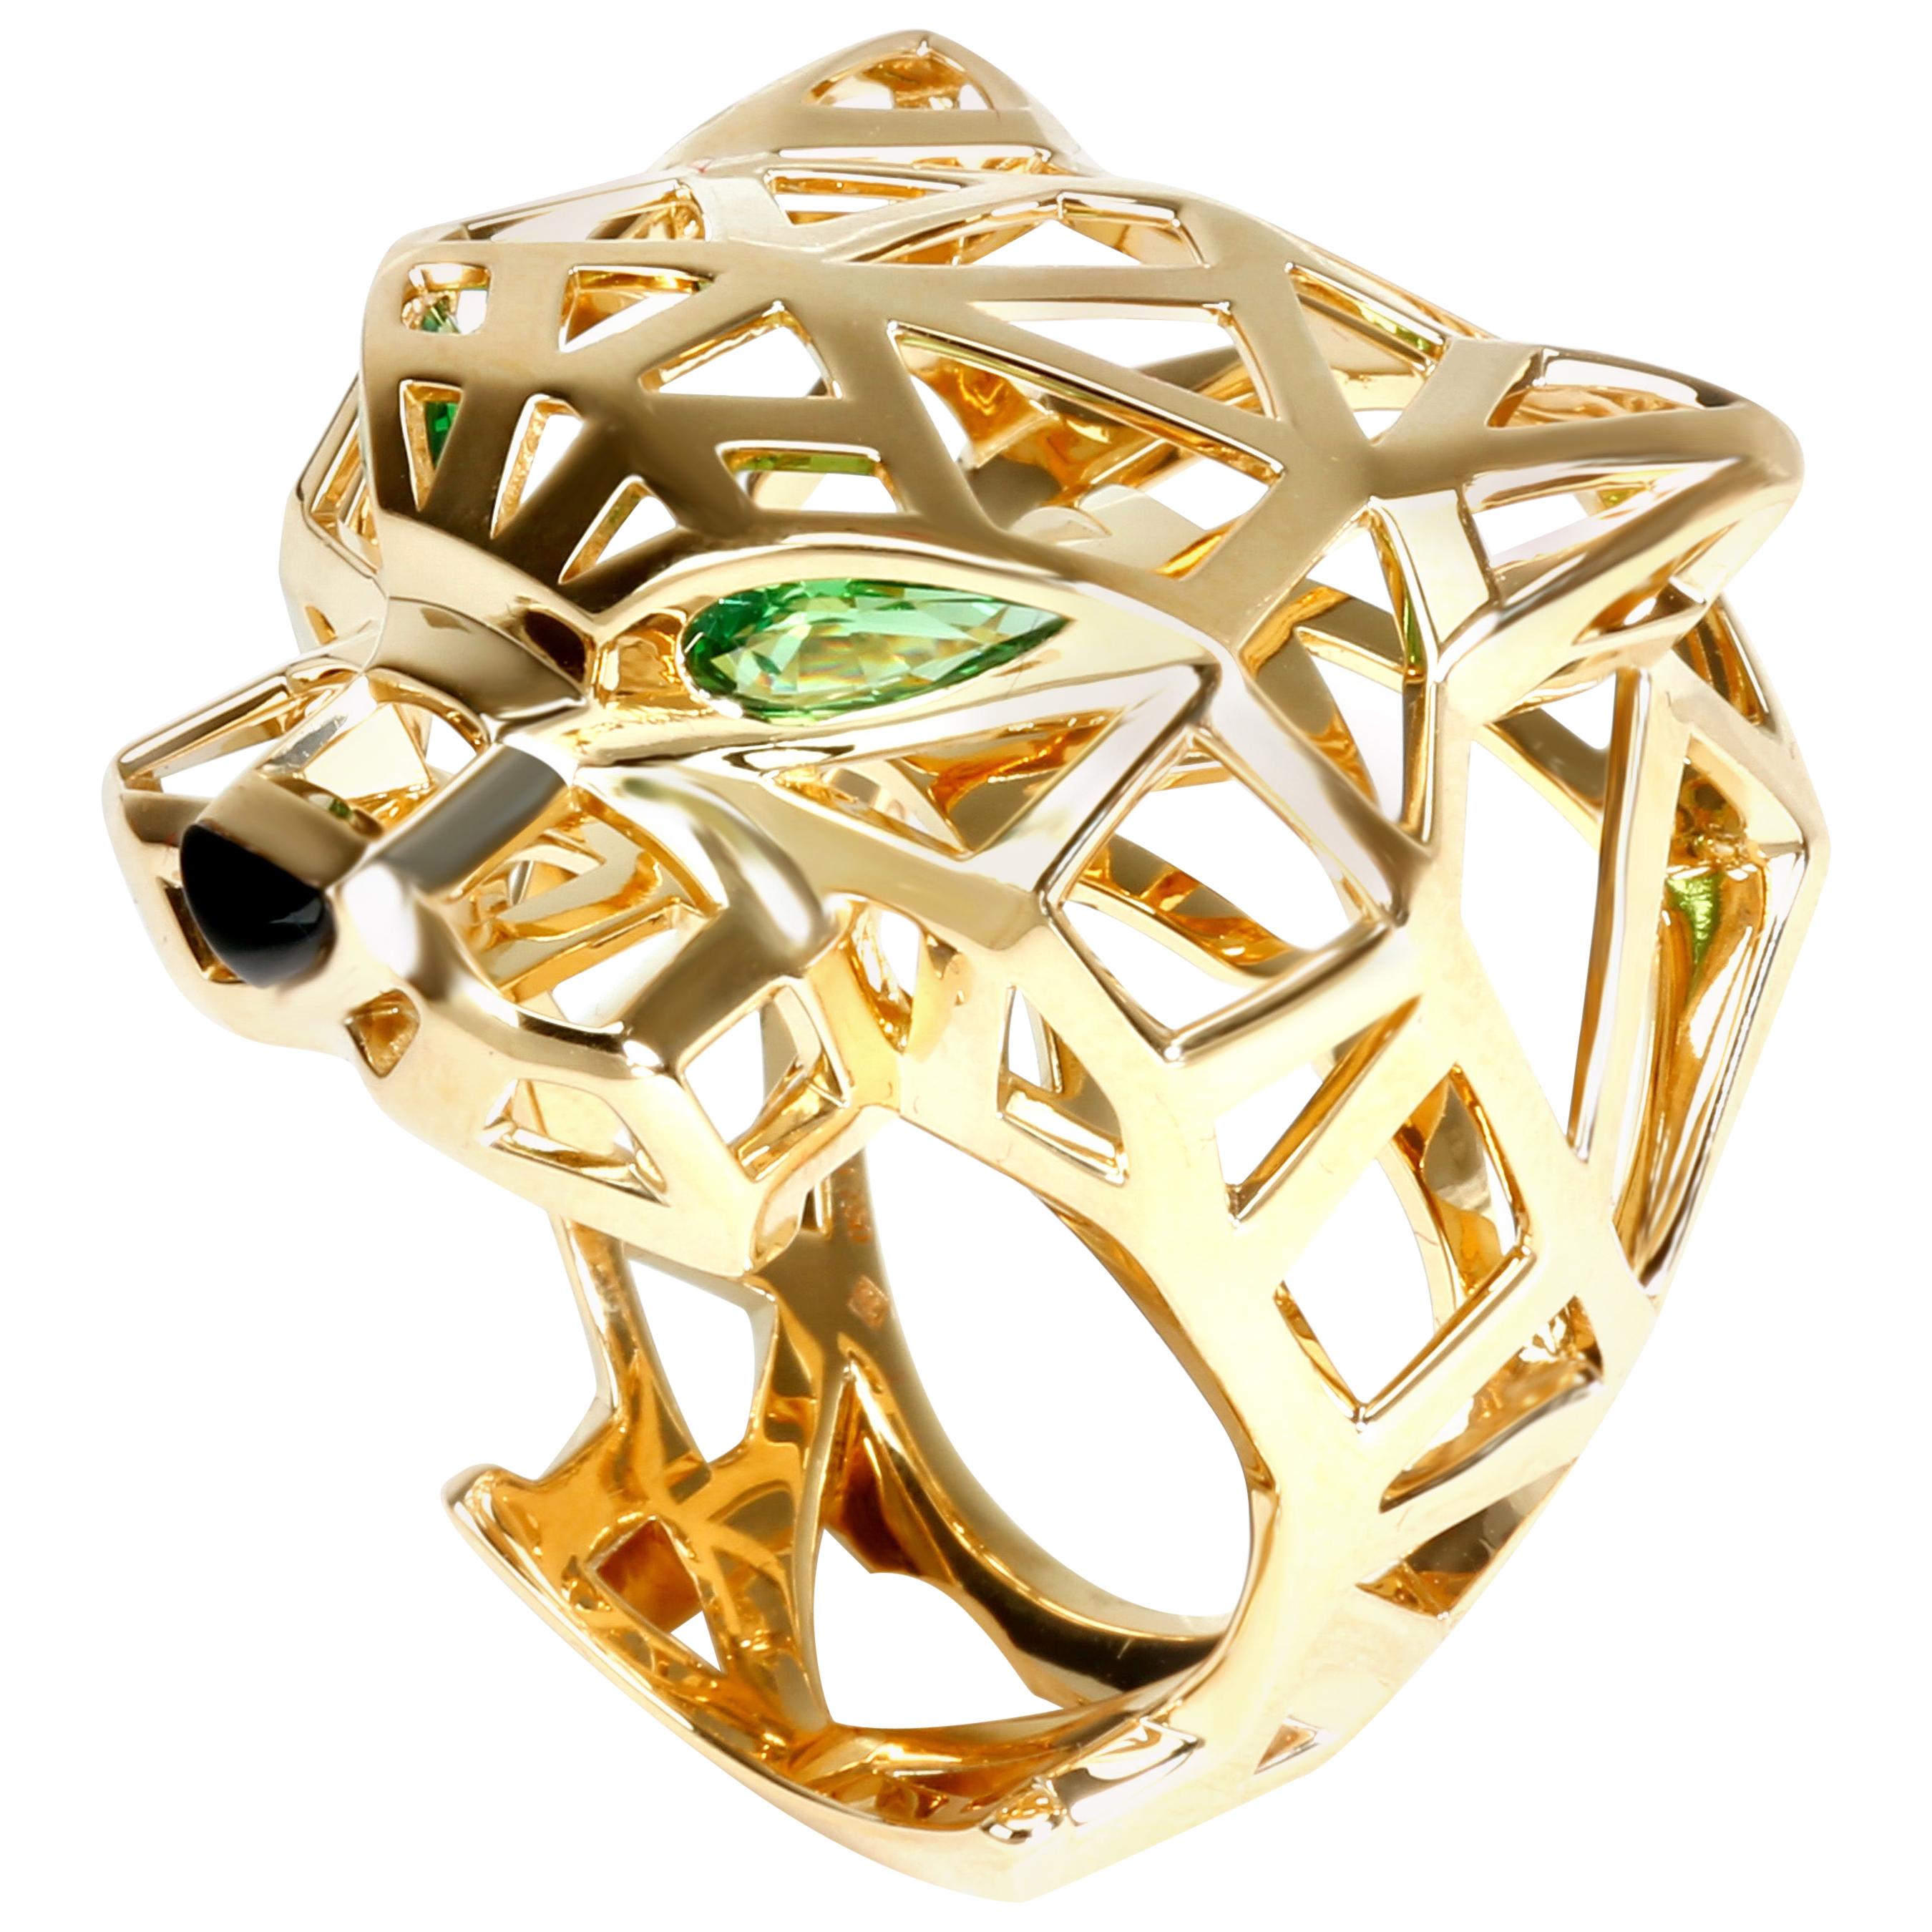 Cartier Panth̬re De Cartier Ring with Onyx and Tourmaline in 18 Karat Gold